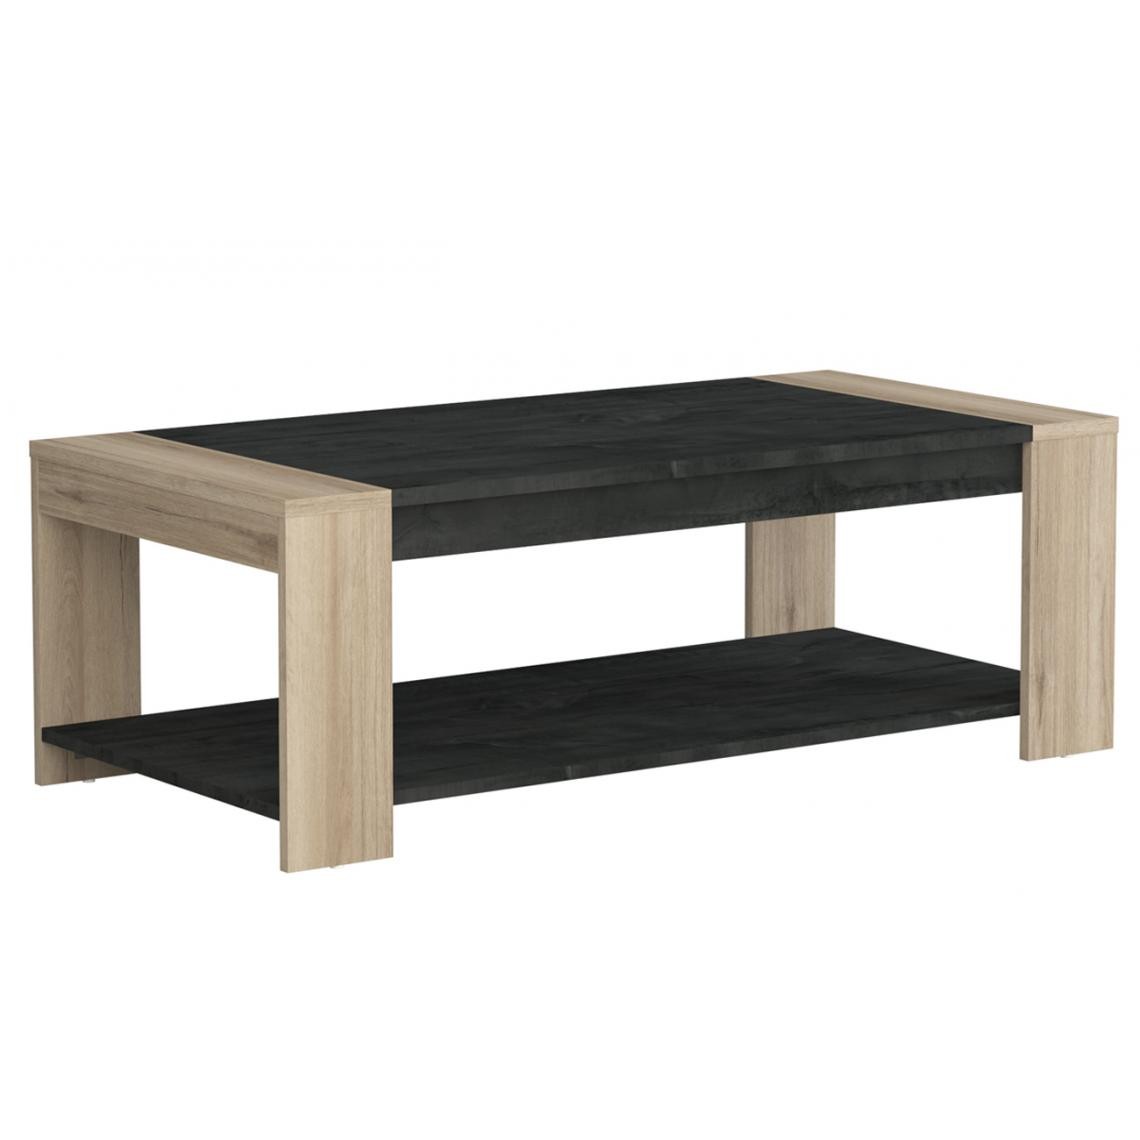 Pegane - Table basse simple finition chêne kronberg/sidewalk - 110 x 38 x 53,1 cm - Tables basses